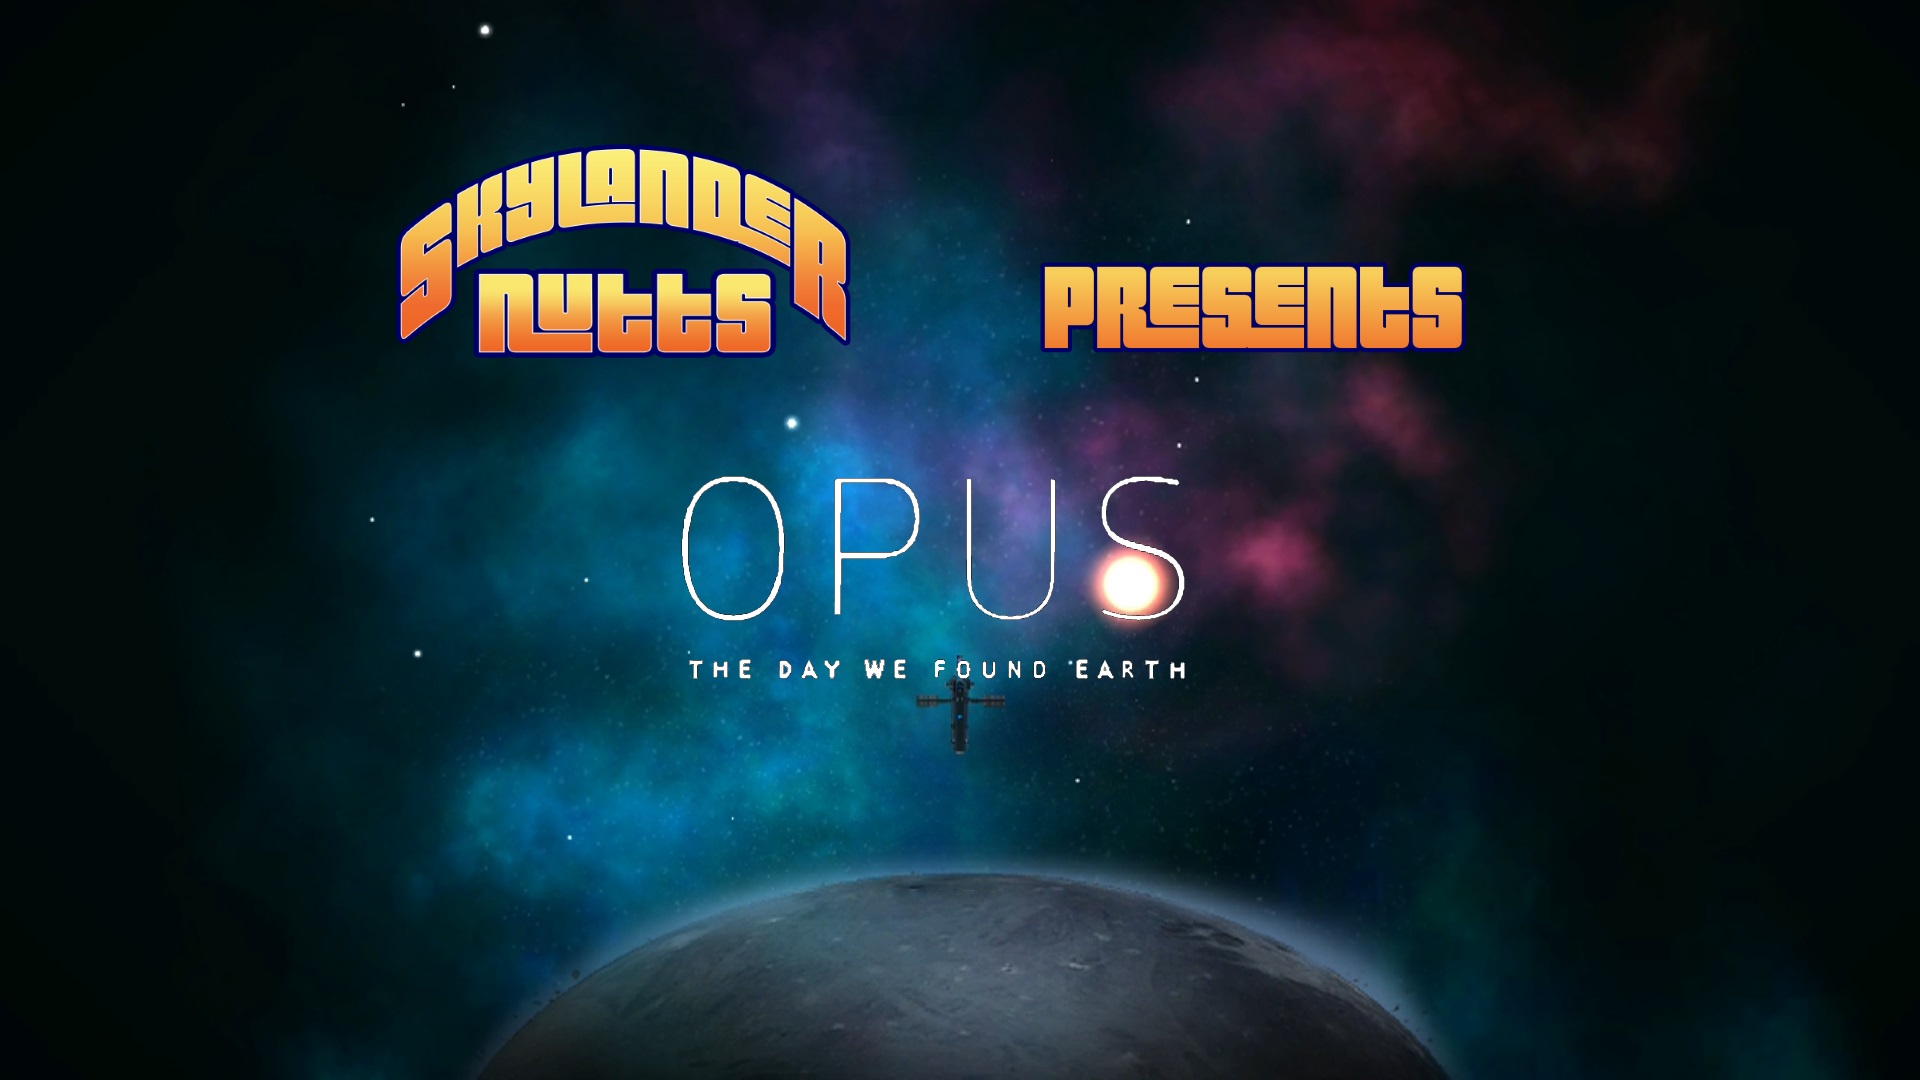 SkylanderNutts Presents Opus The Day We Found Earth